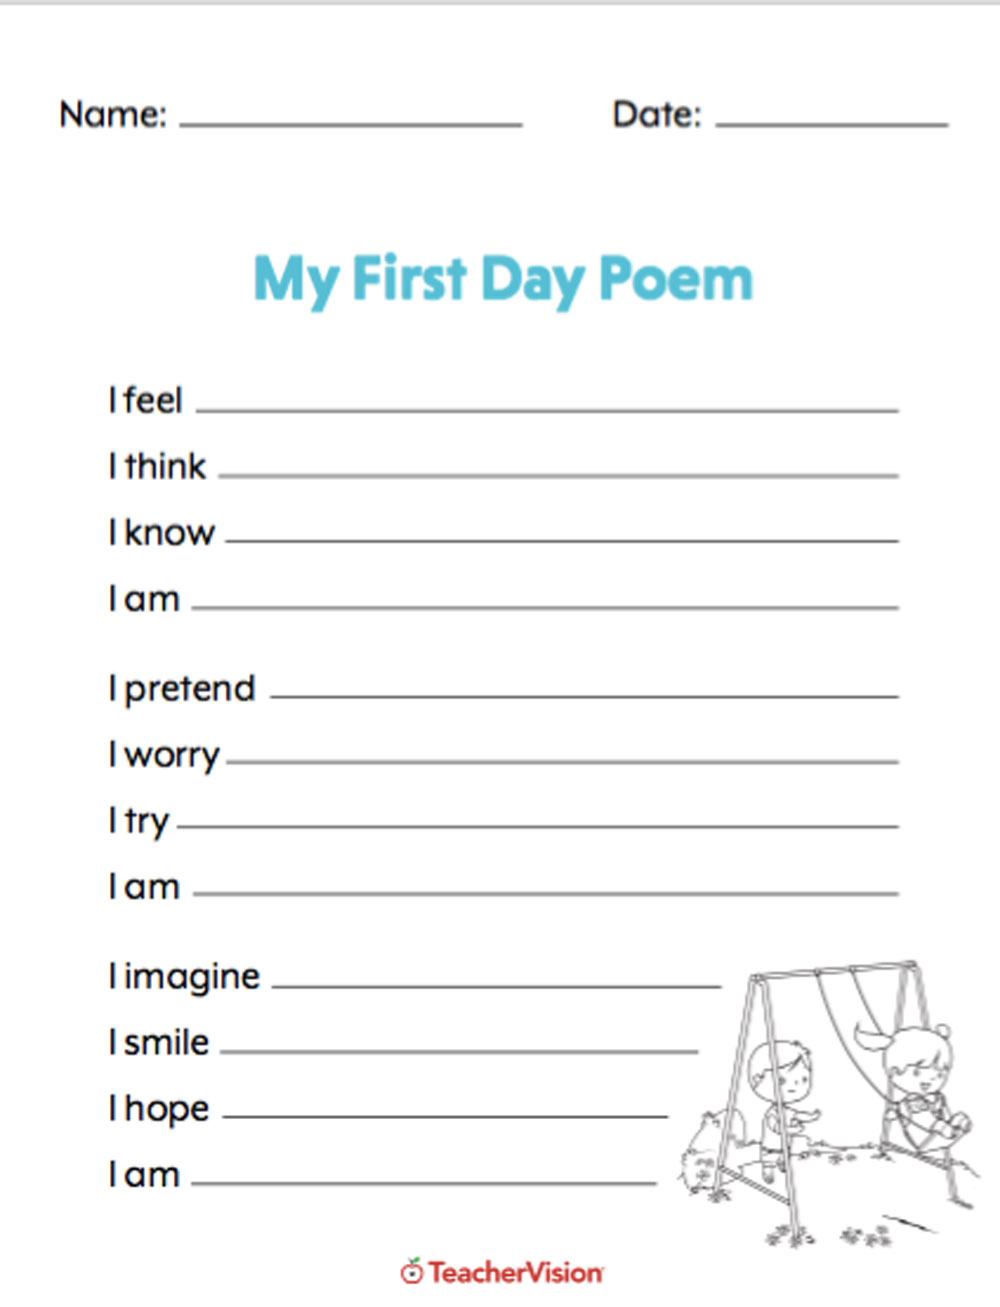 My First Day Poem